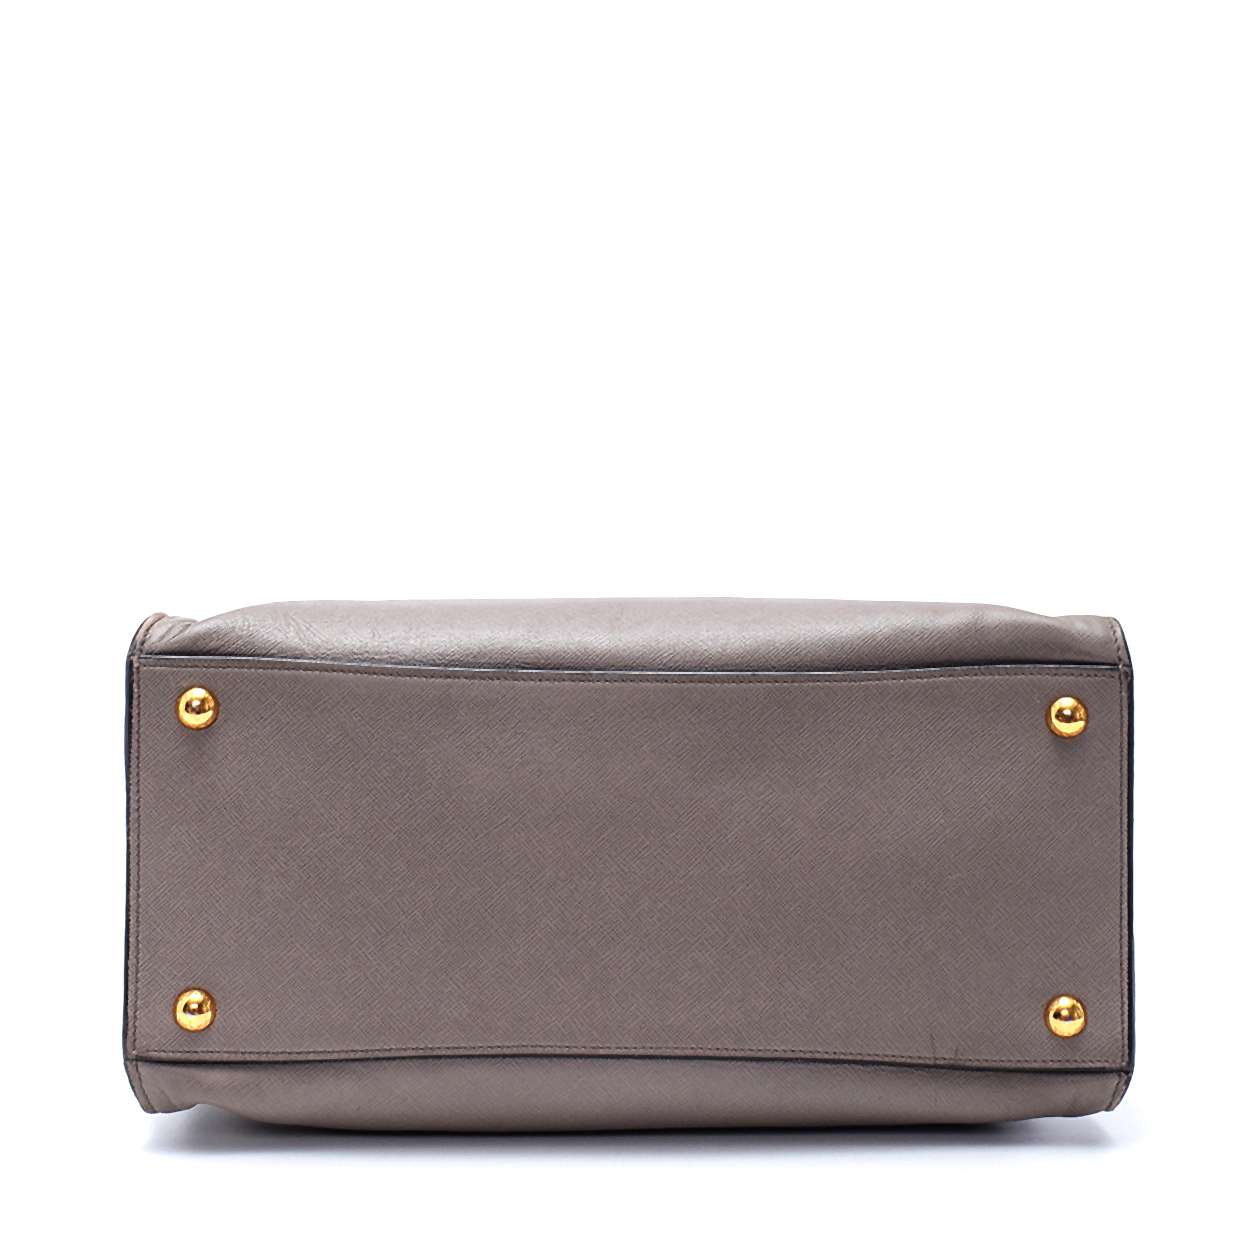 Prada - Grey Saffiano Leather Tote Bag